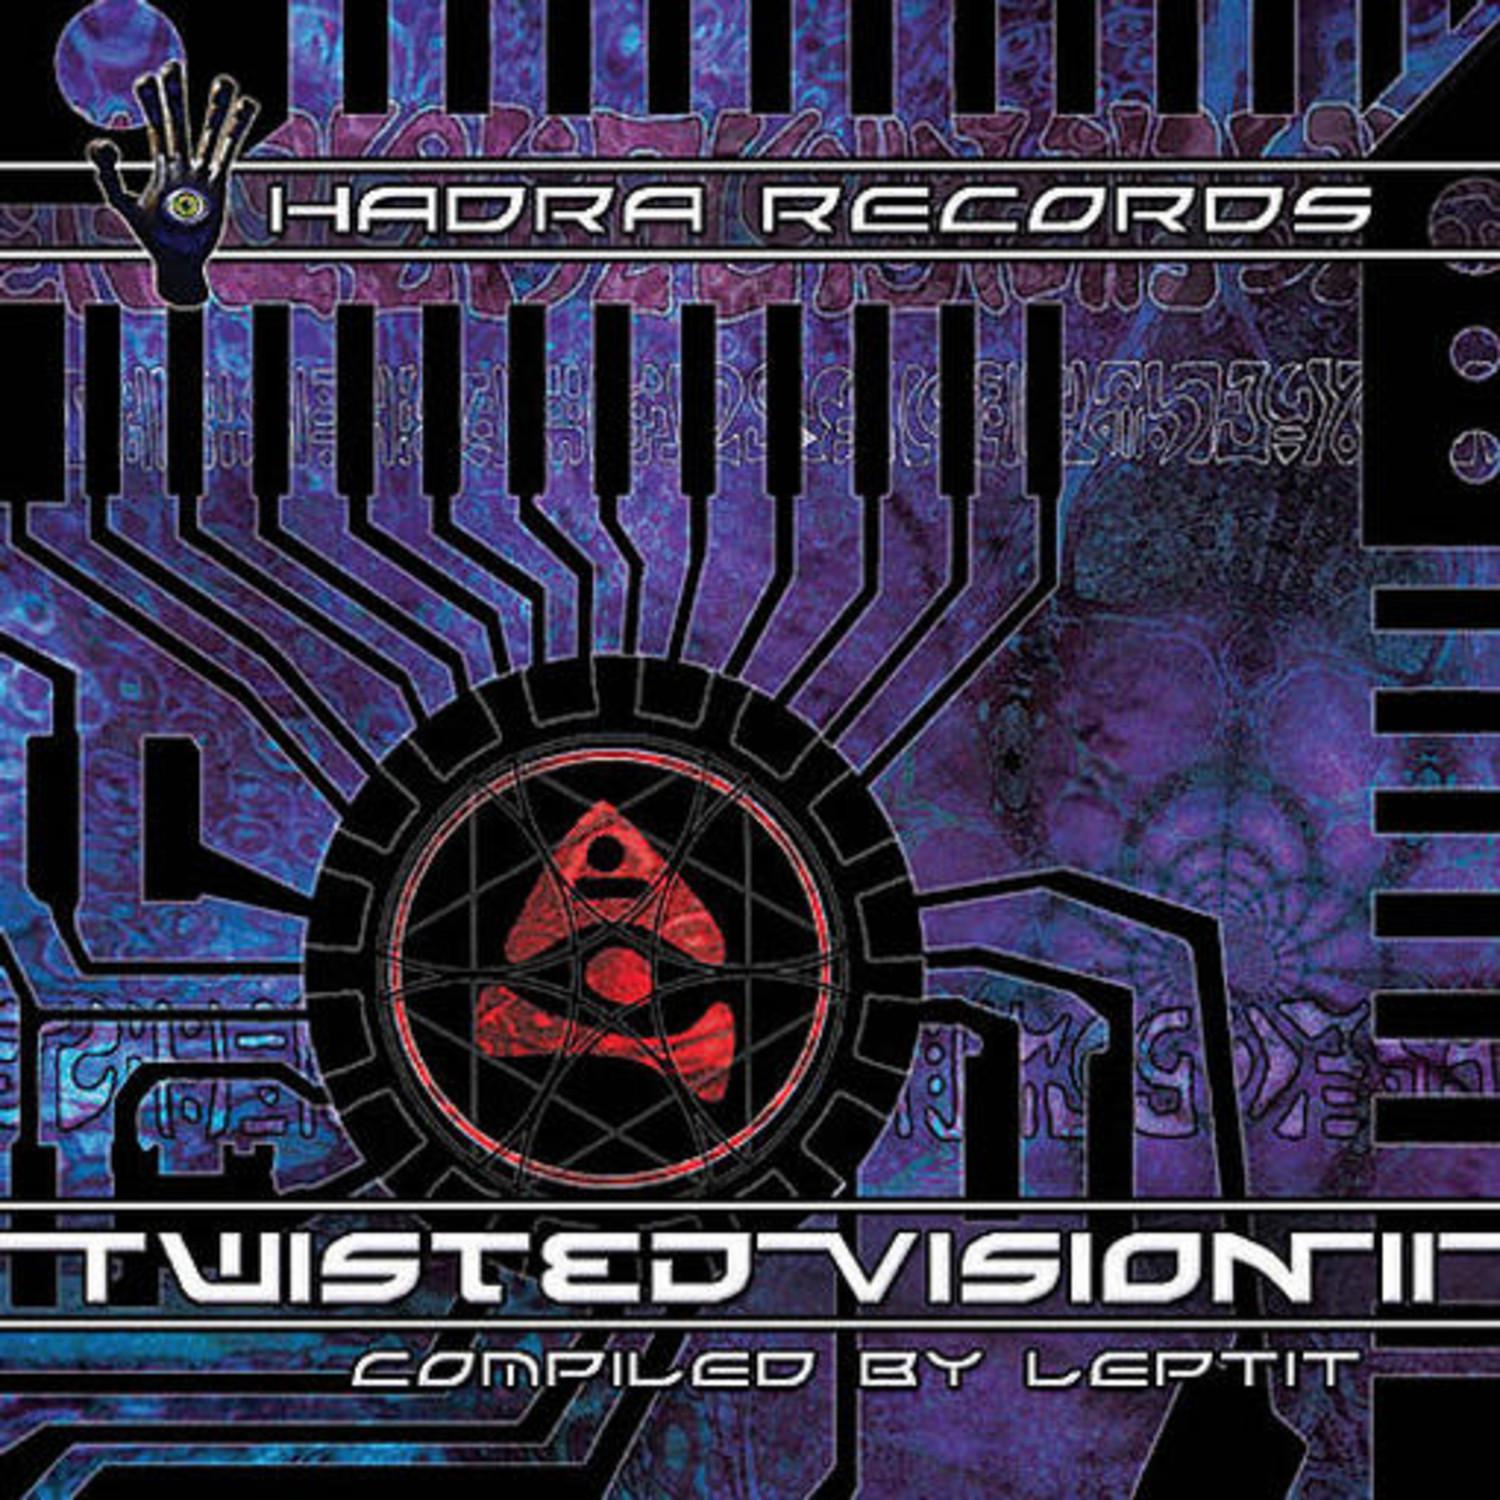 Twisted Vision II